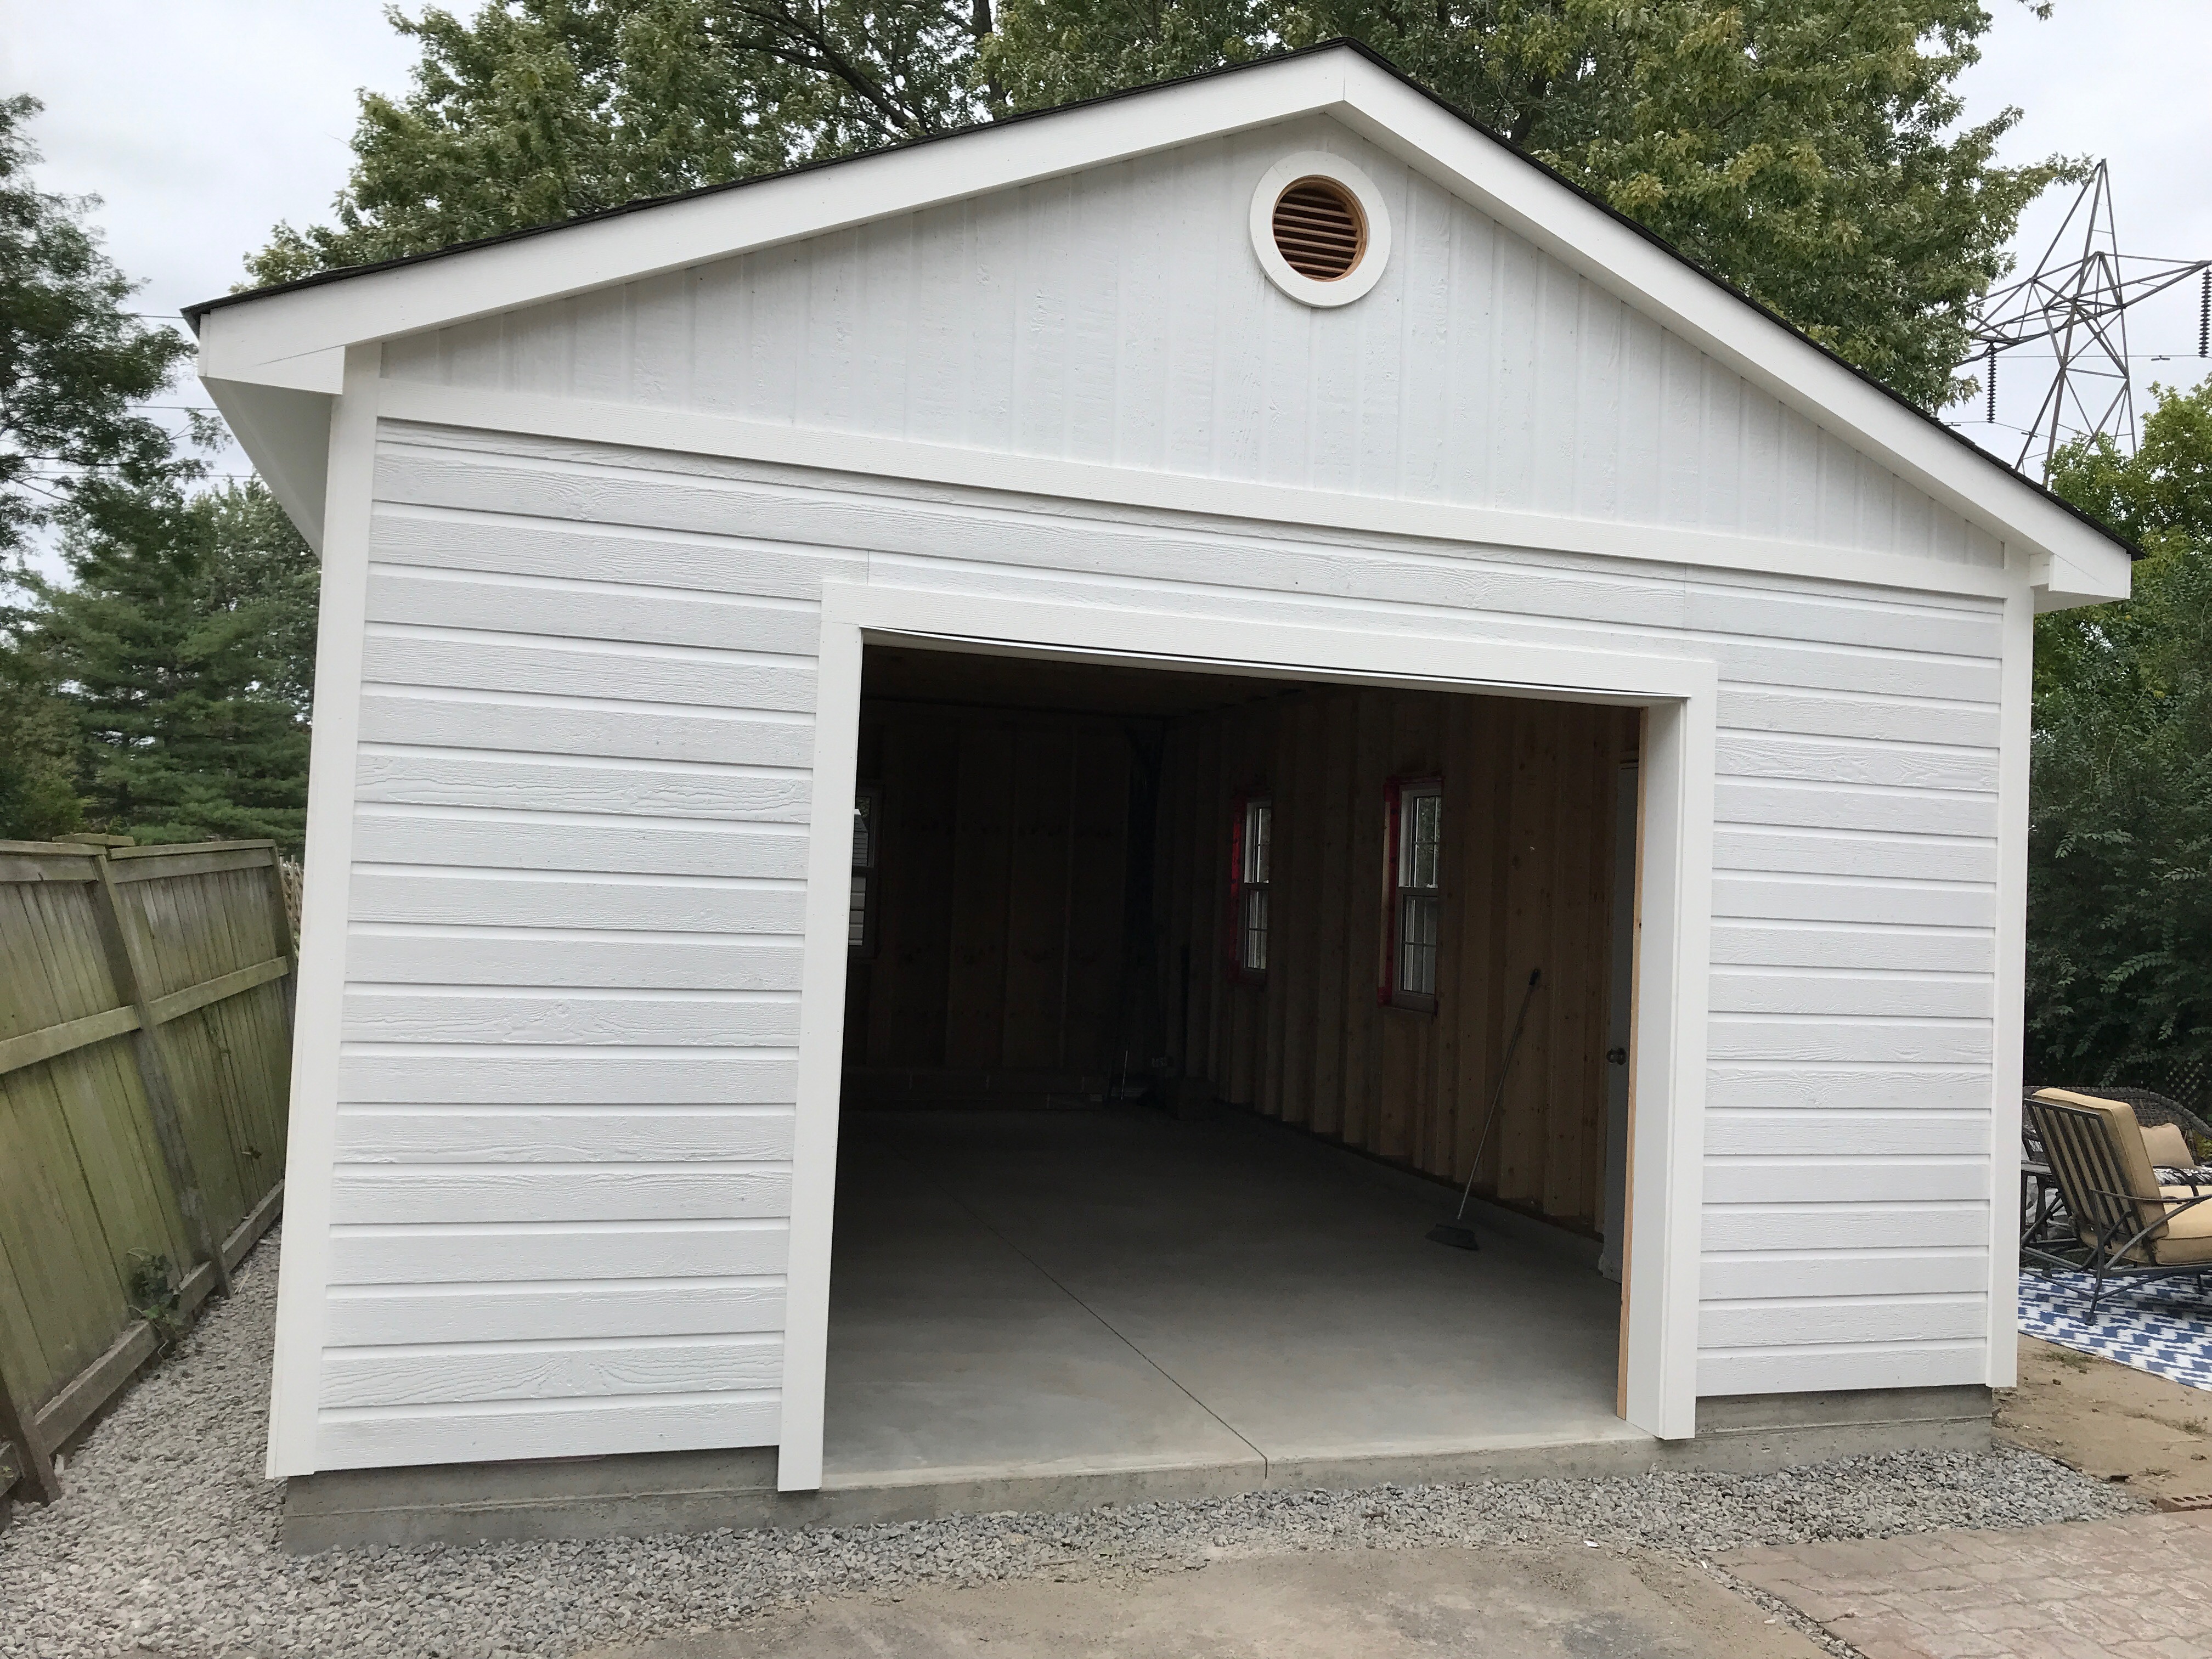 Canexcel highlands garage 16 x 25 with steel insulated garage door in Scarborough 